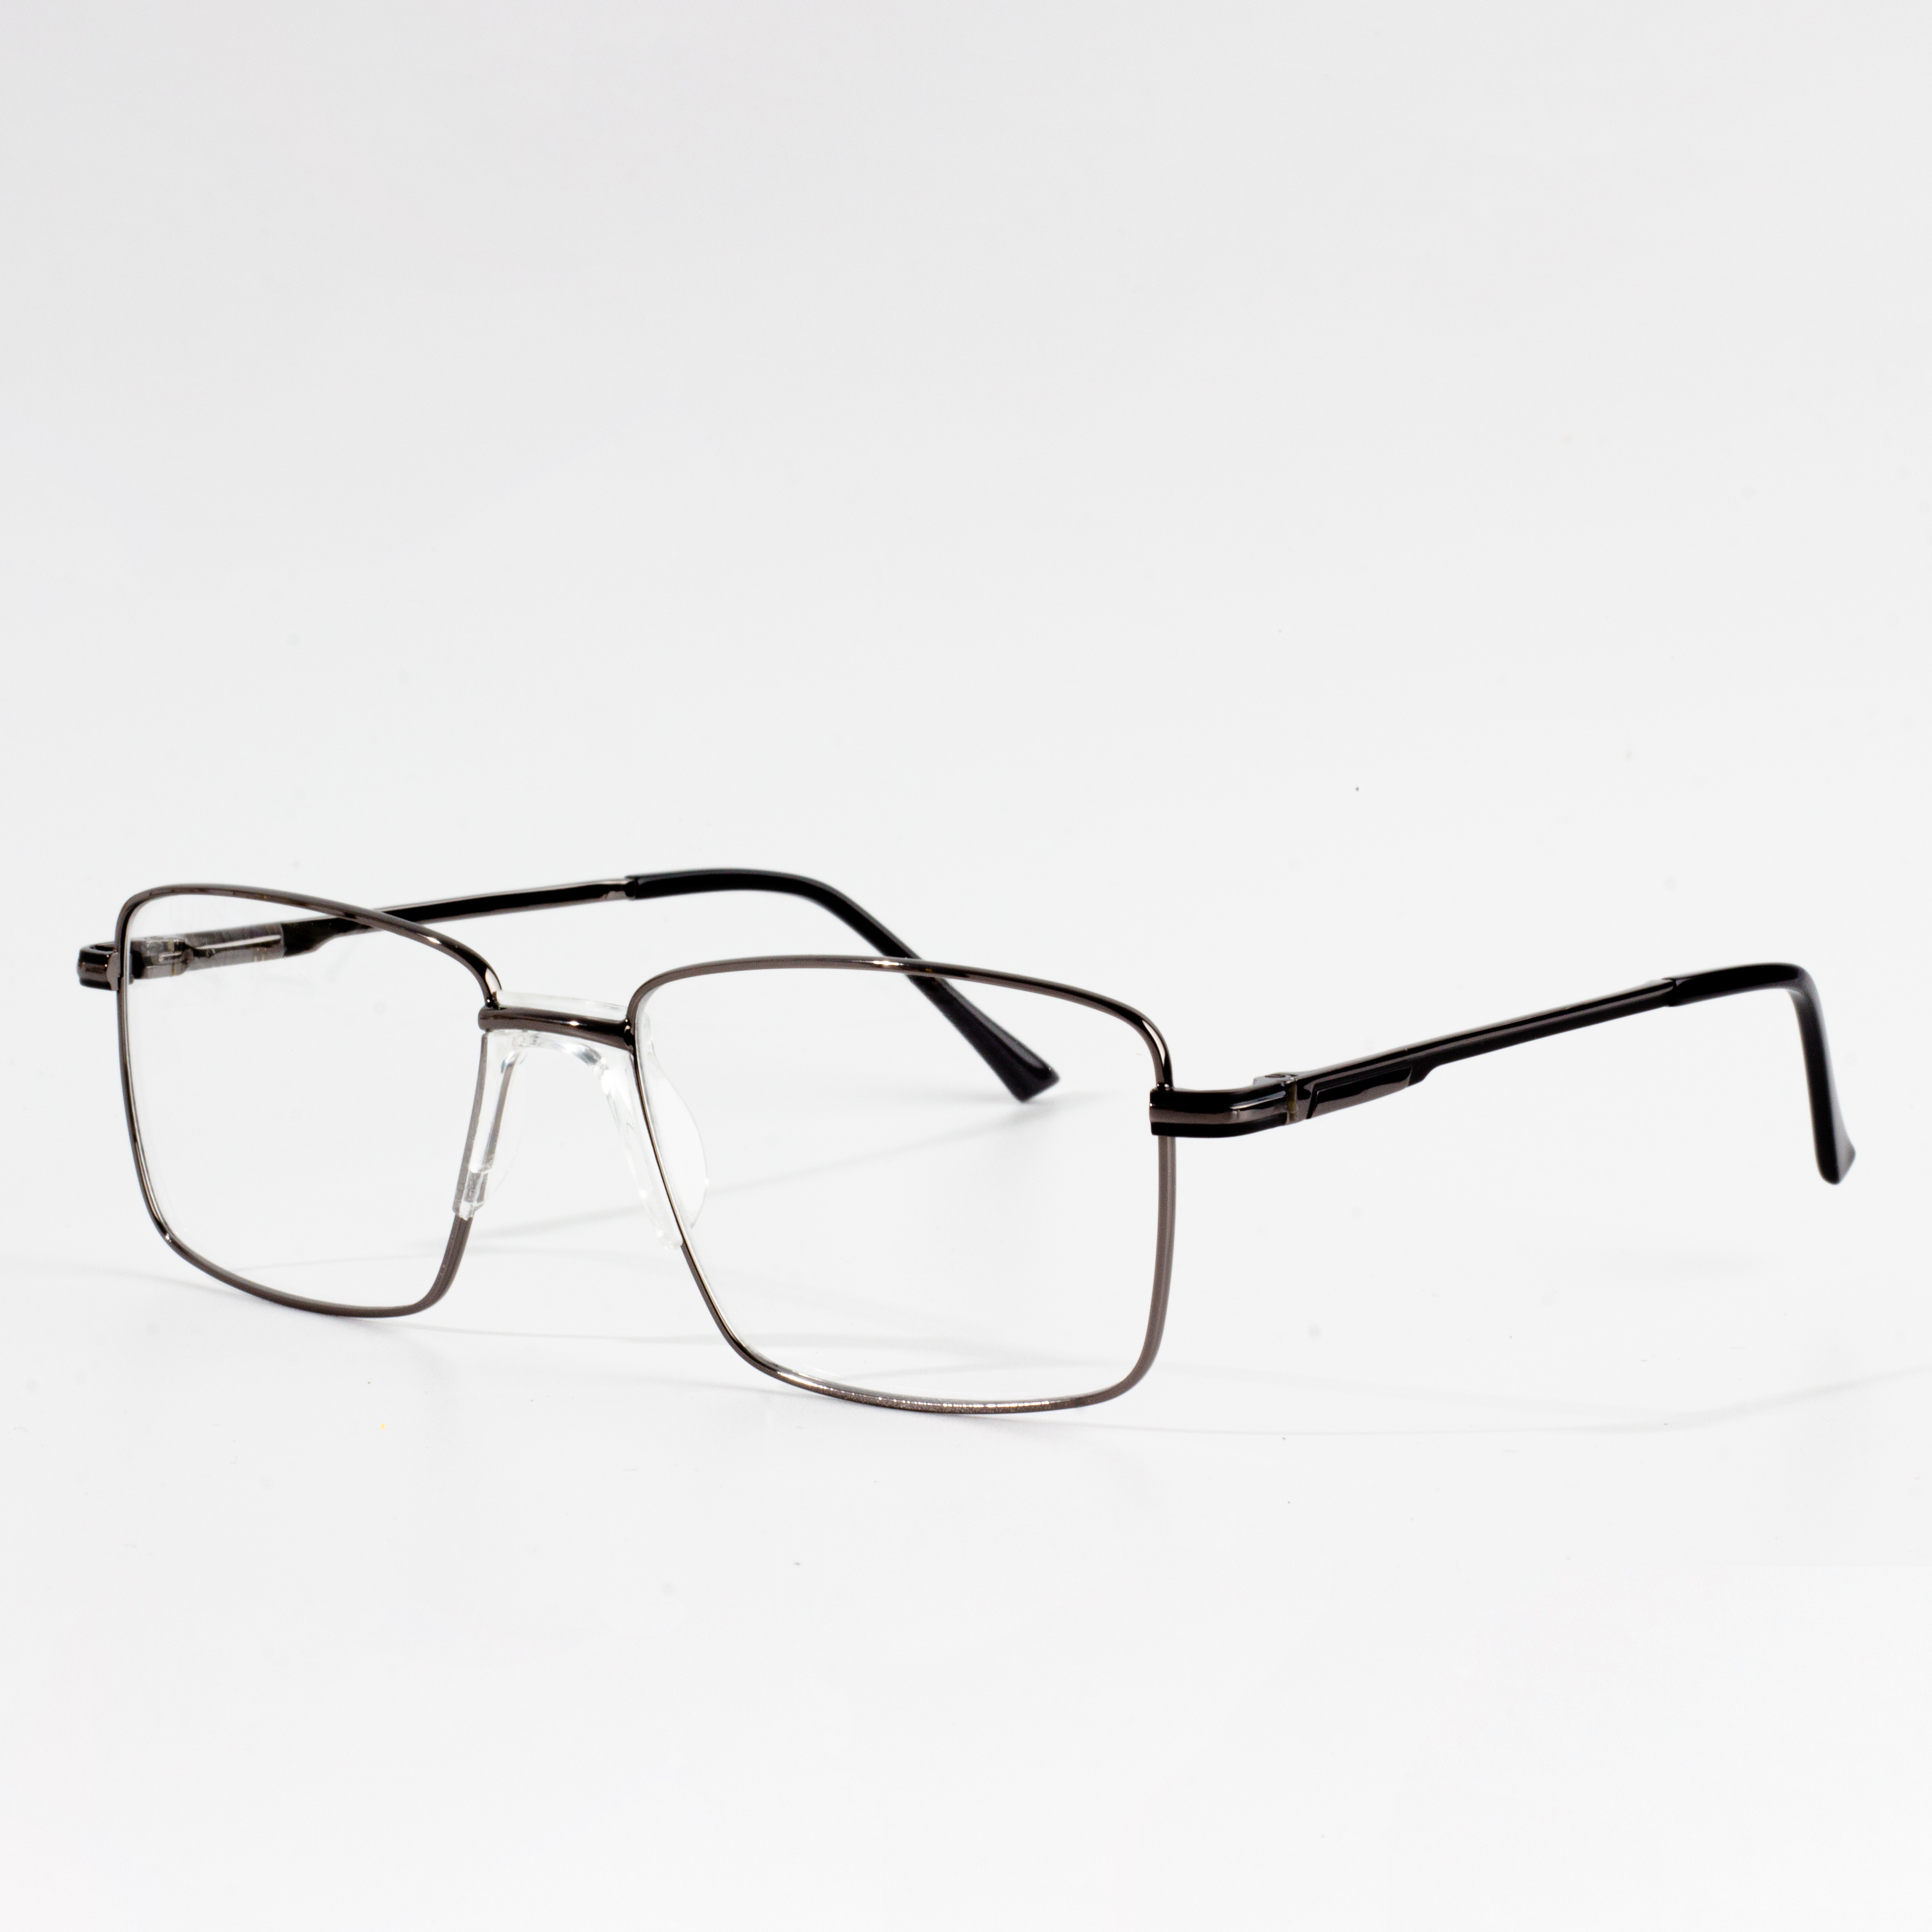 mens eyeglass frames